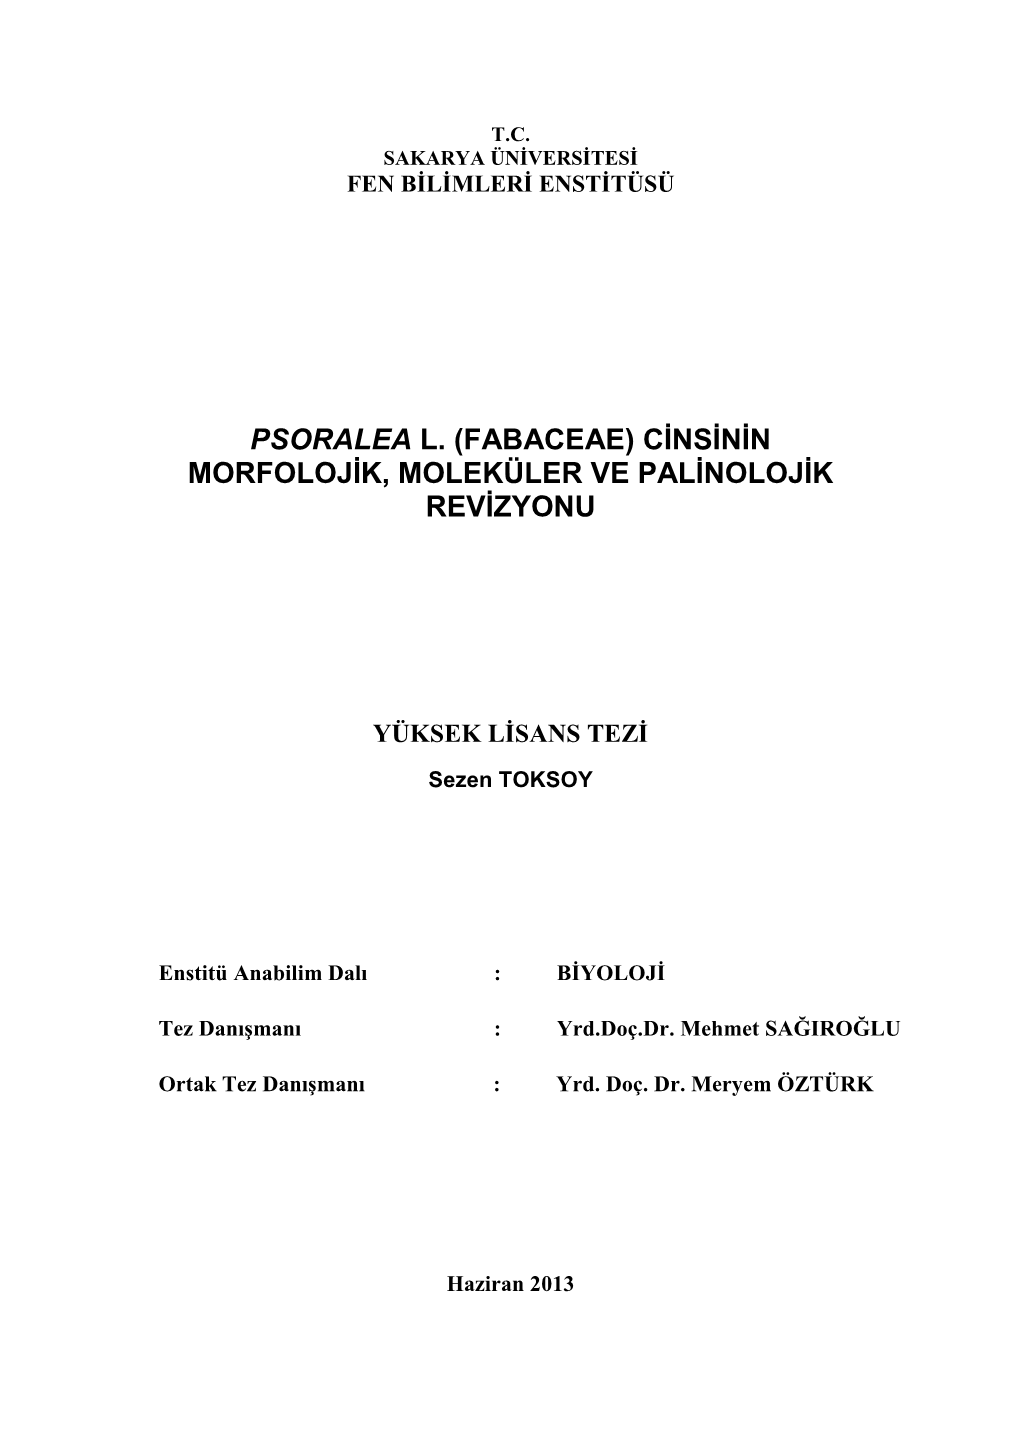 Psoralea L. (Fabaceae) Cinsinin Morfolojik, Moleküler Ve Palinolojik Revizyonu